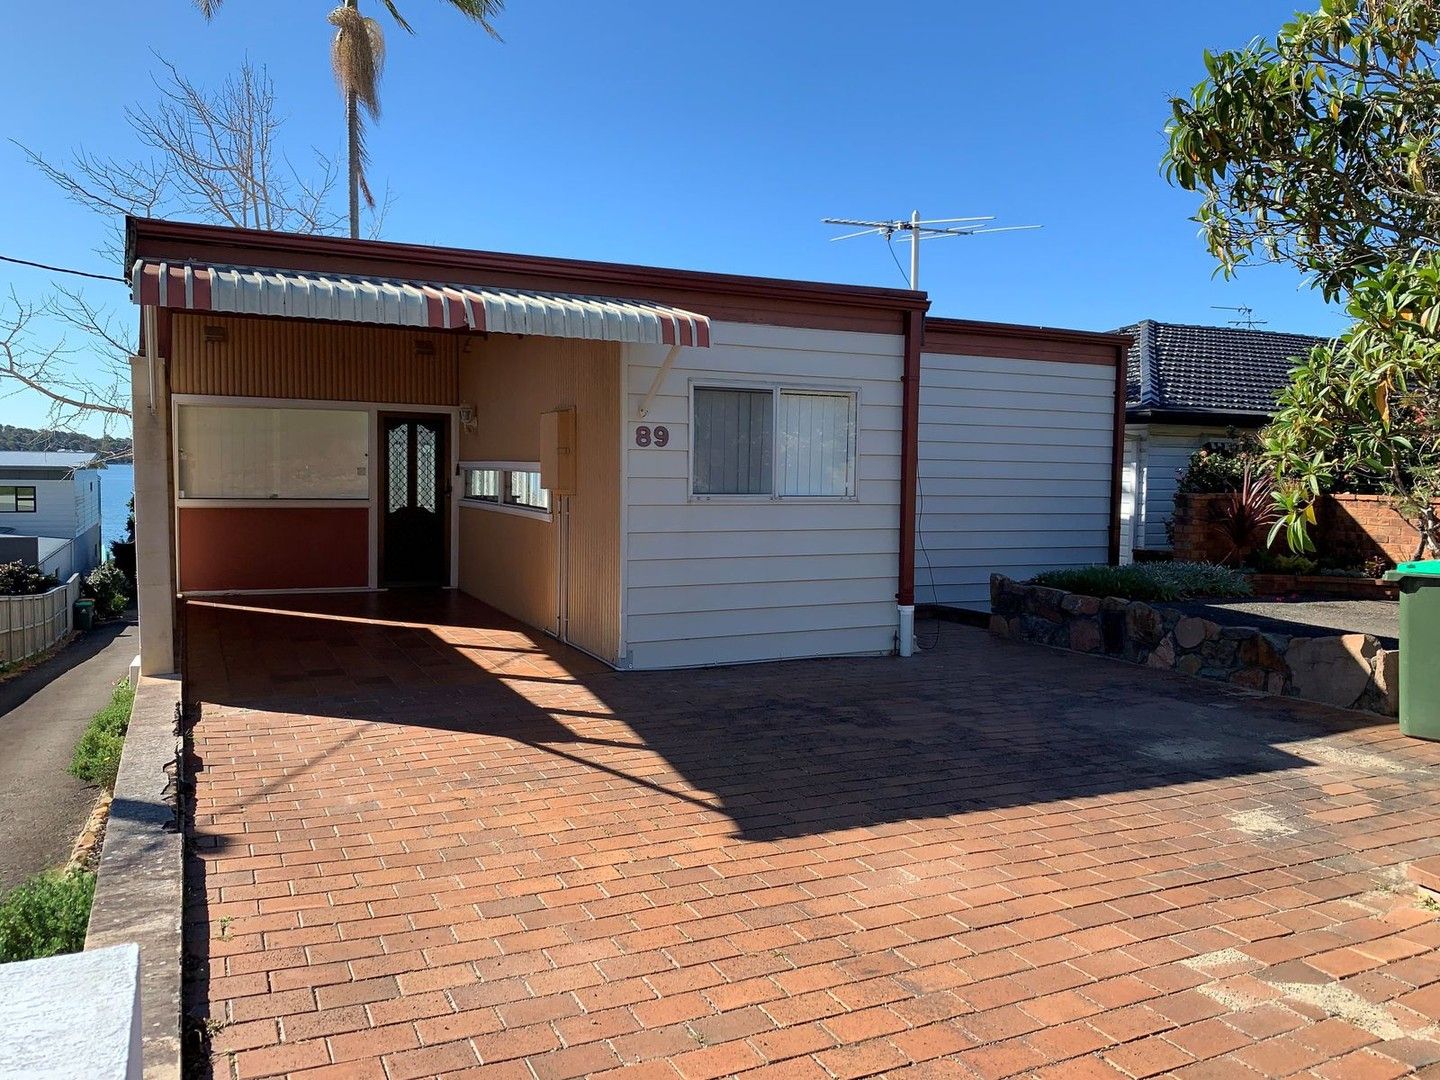 2 bedrooms House in 89 Brighton Avenue TORONTO NSW, 2283